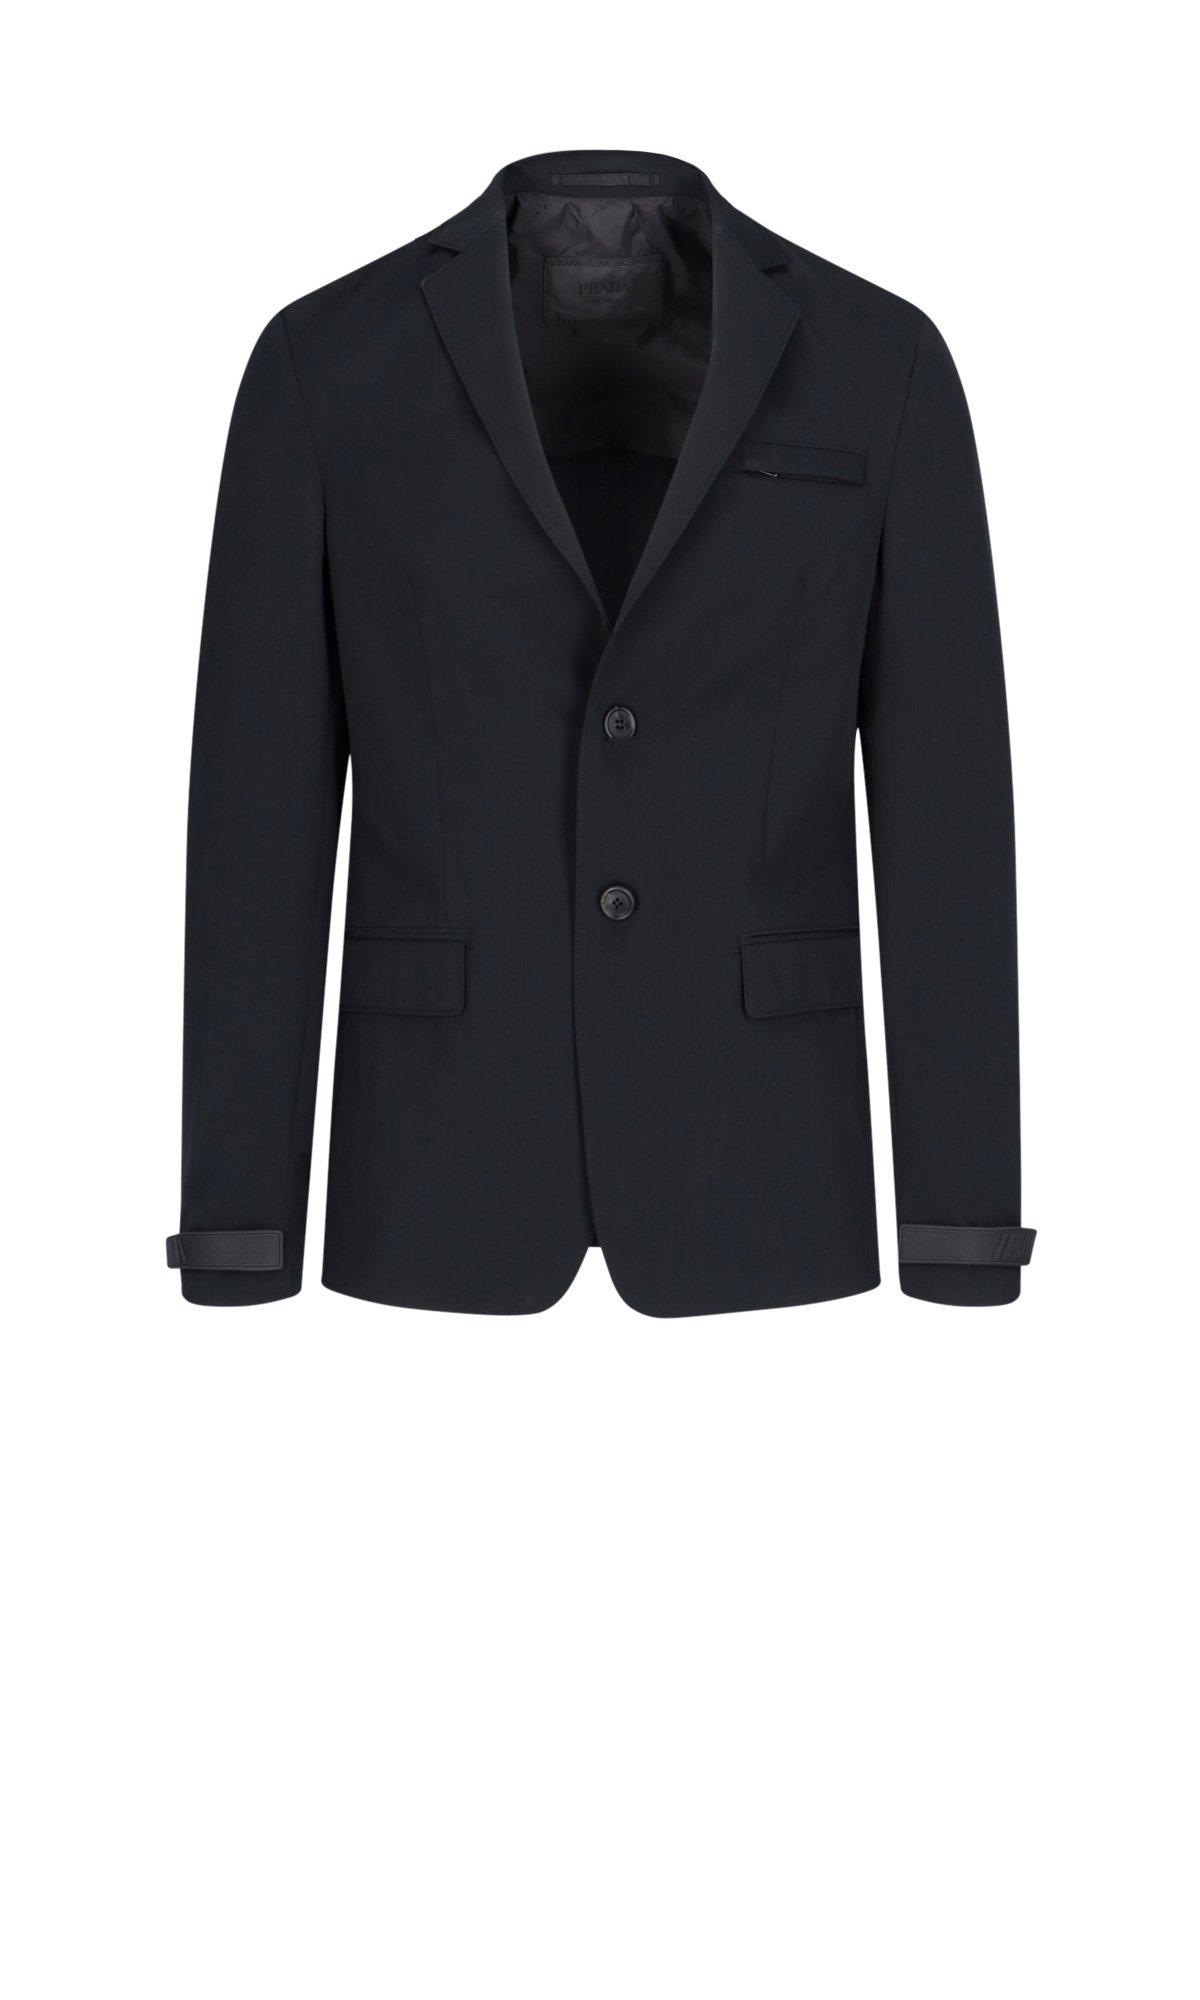 Prada Synthetic Slim-fit Tailored Blazer in Black for Men - Lyst